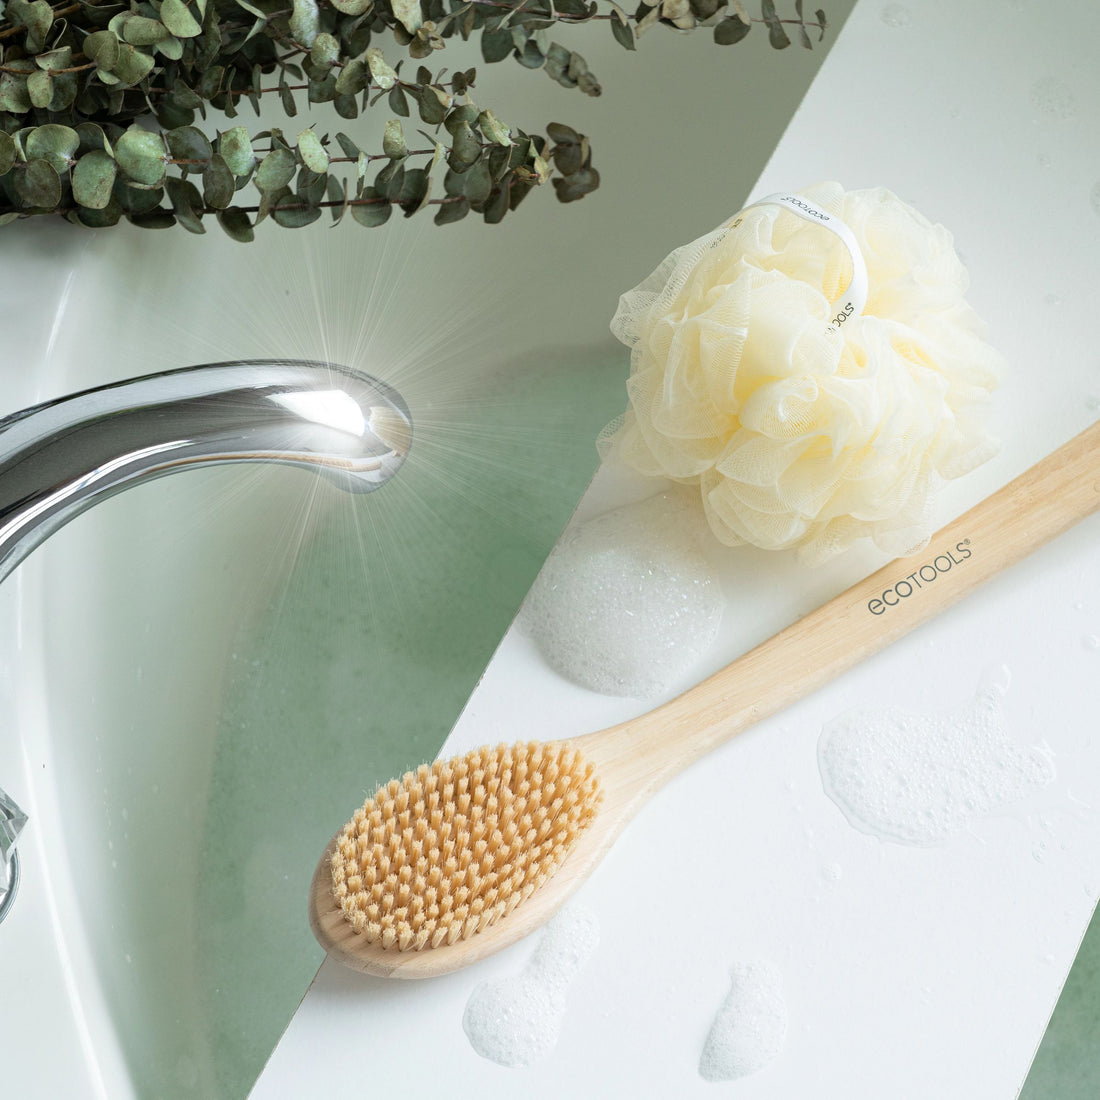 Home - The Simple Scrub - A Better Bathroom Brush